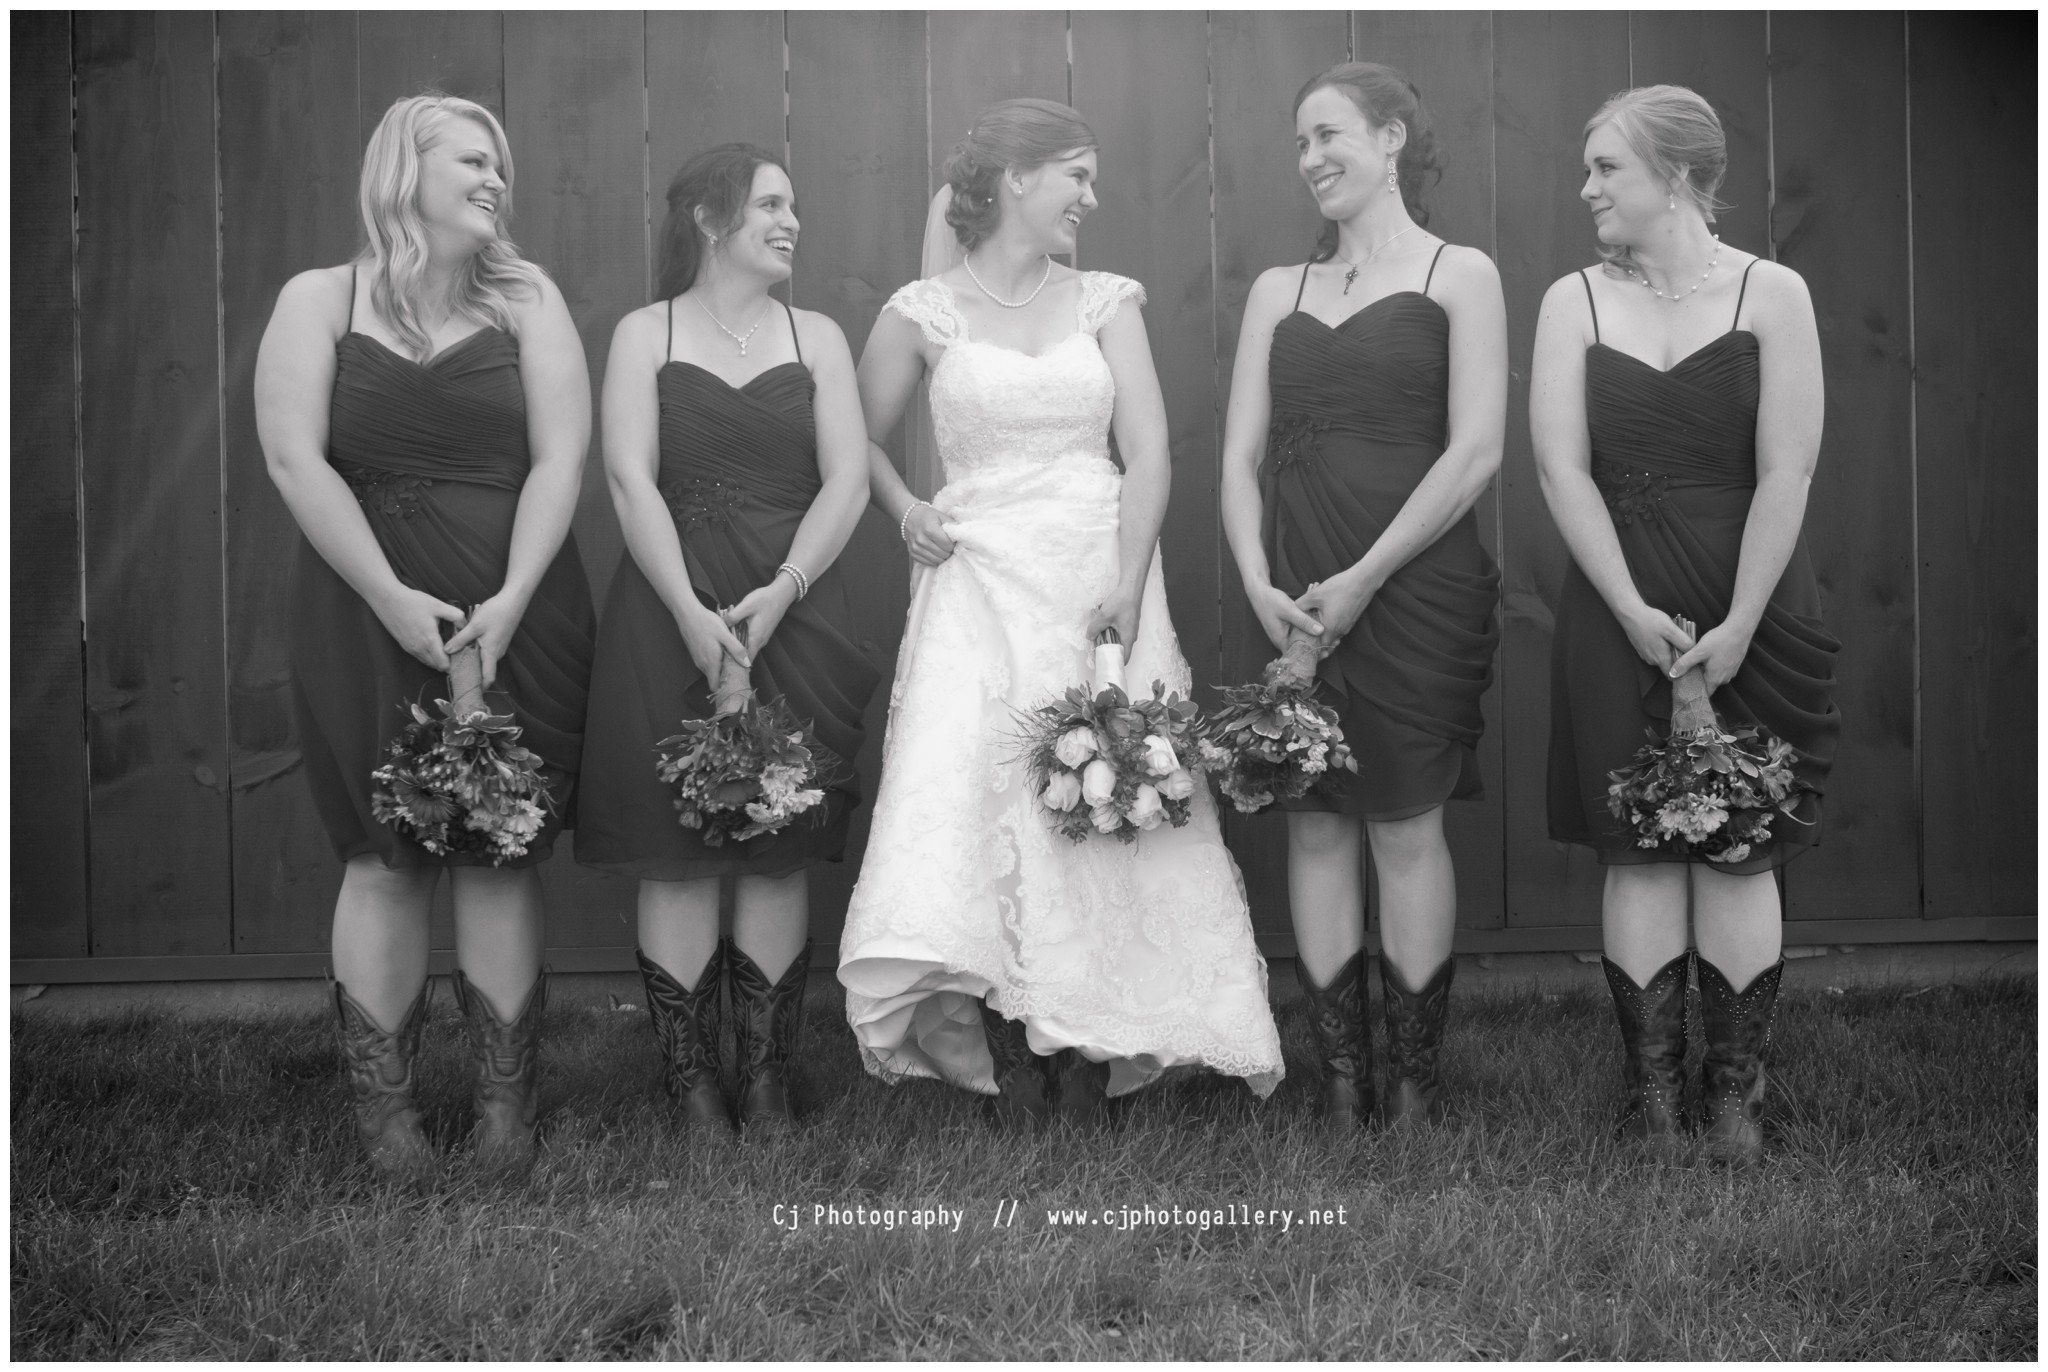 Appleton Wisconsin Wedding Photography - Cj Photography